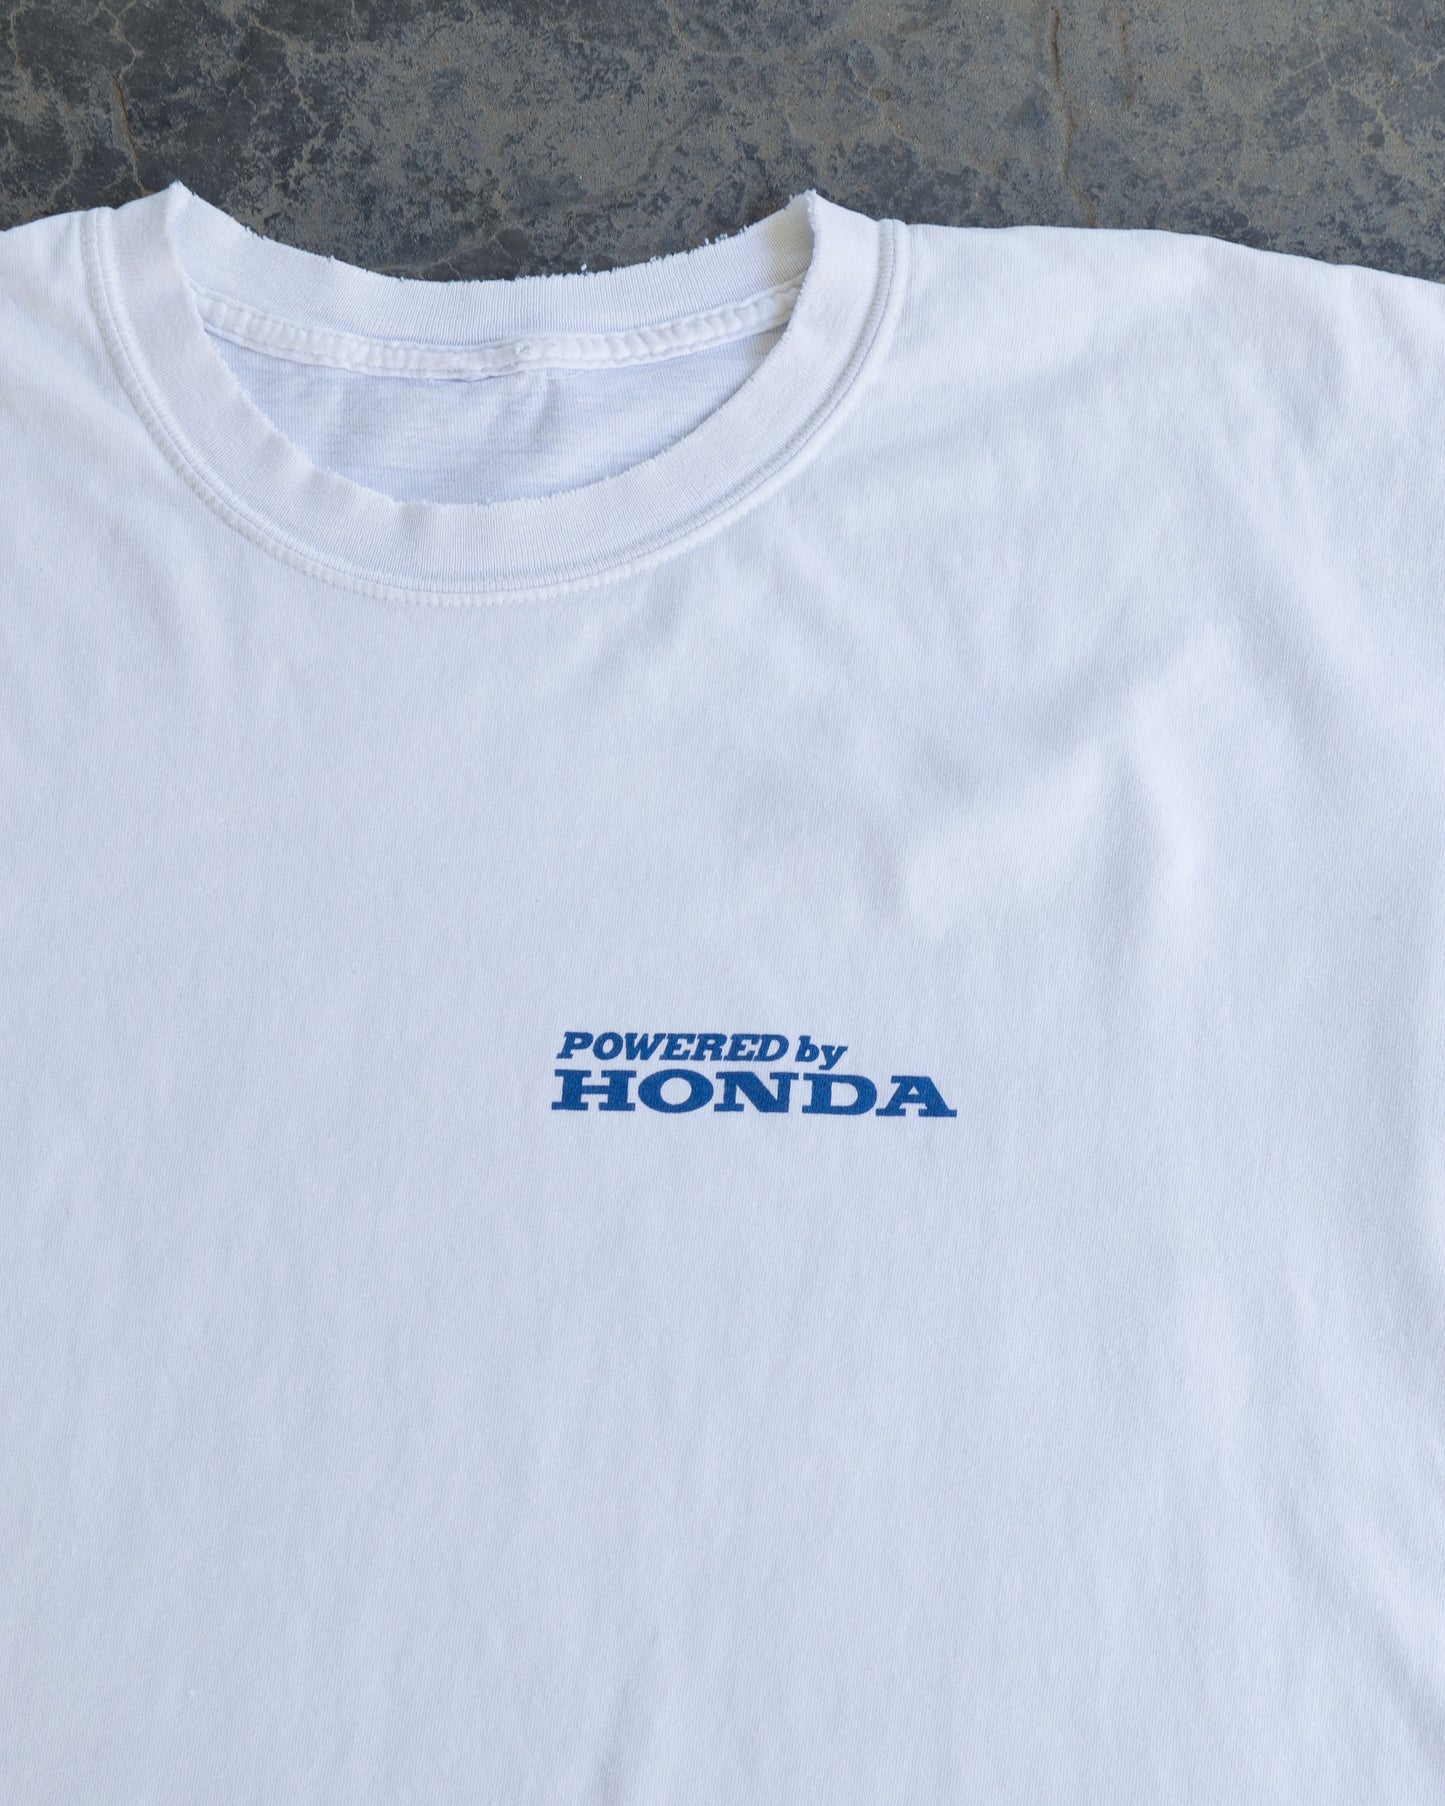 90s Powered by Honda JDM White Tee - L